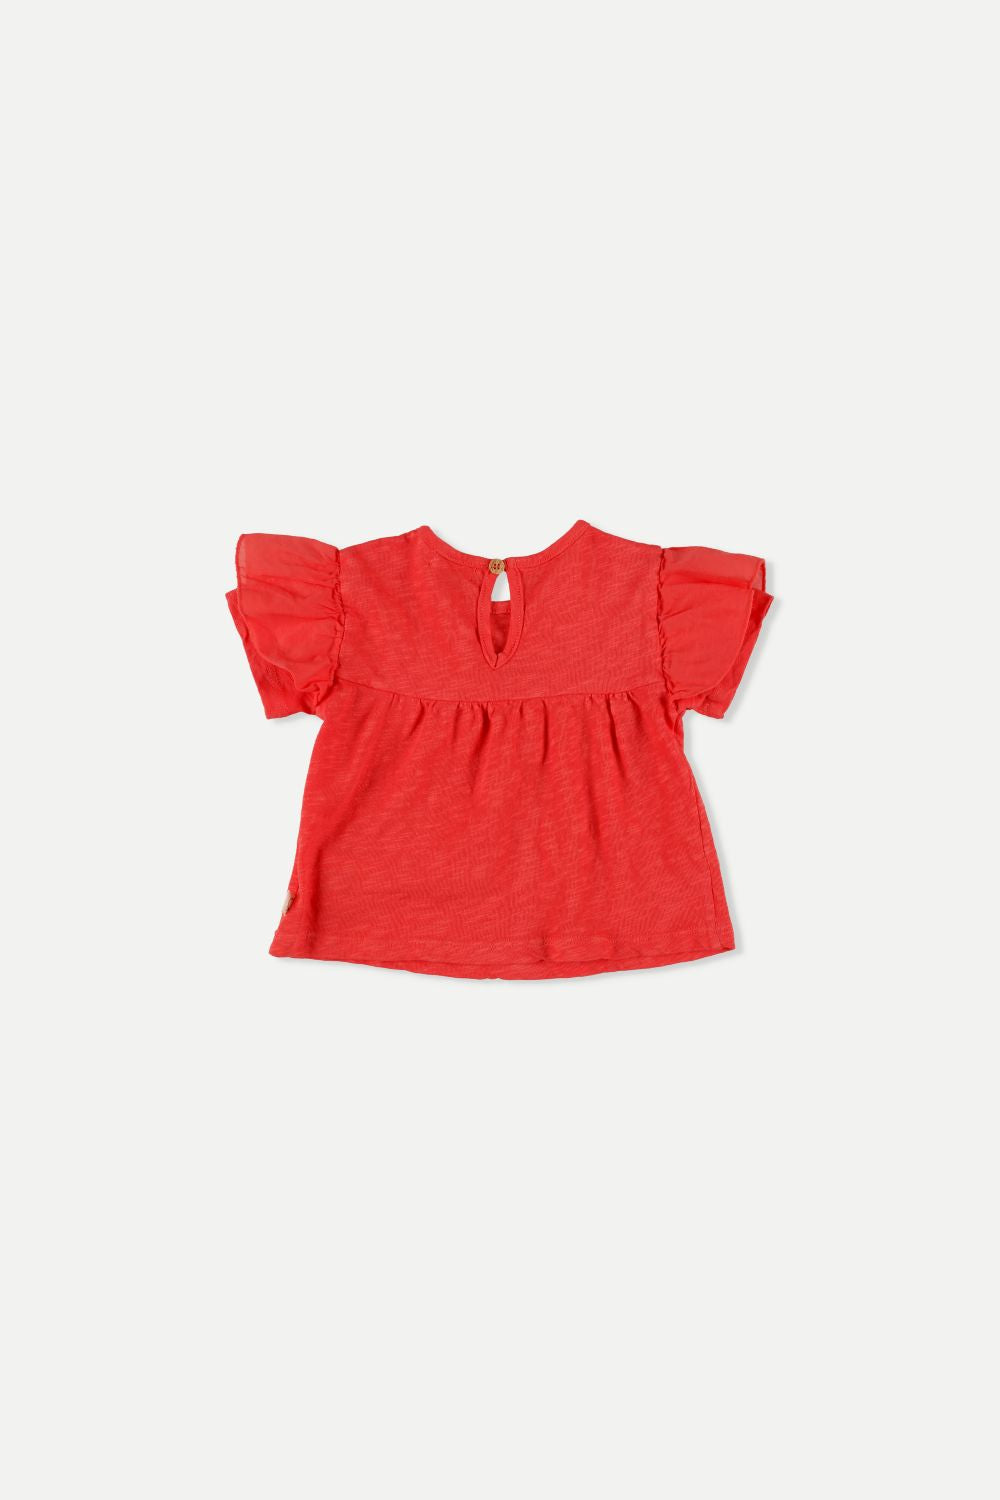 My Little Cozmo -  Baby T-Shirt Rüschen rot